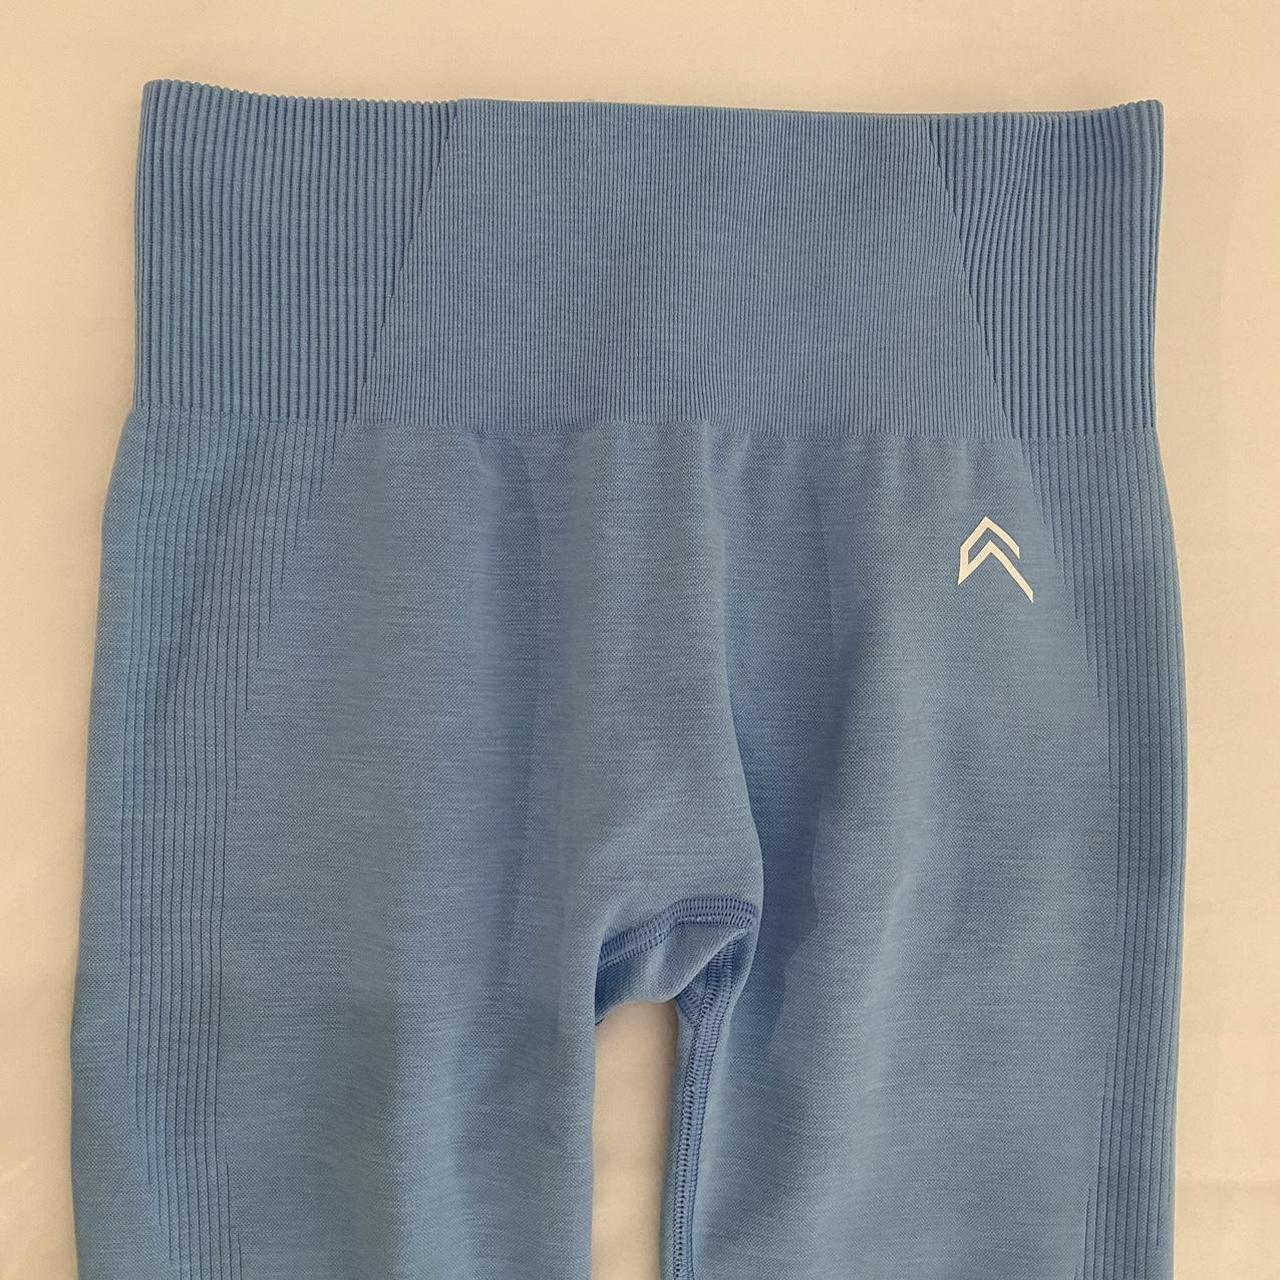 Oner Active classic seamless leggings in blue... - Depop